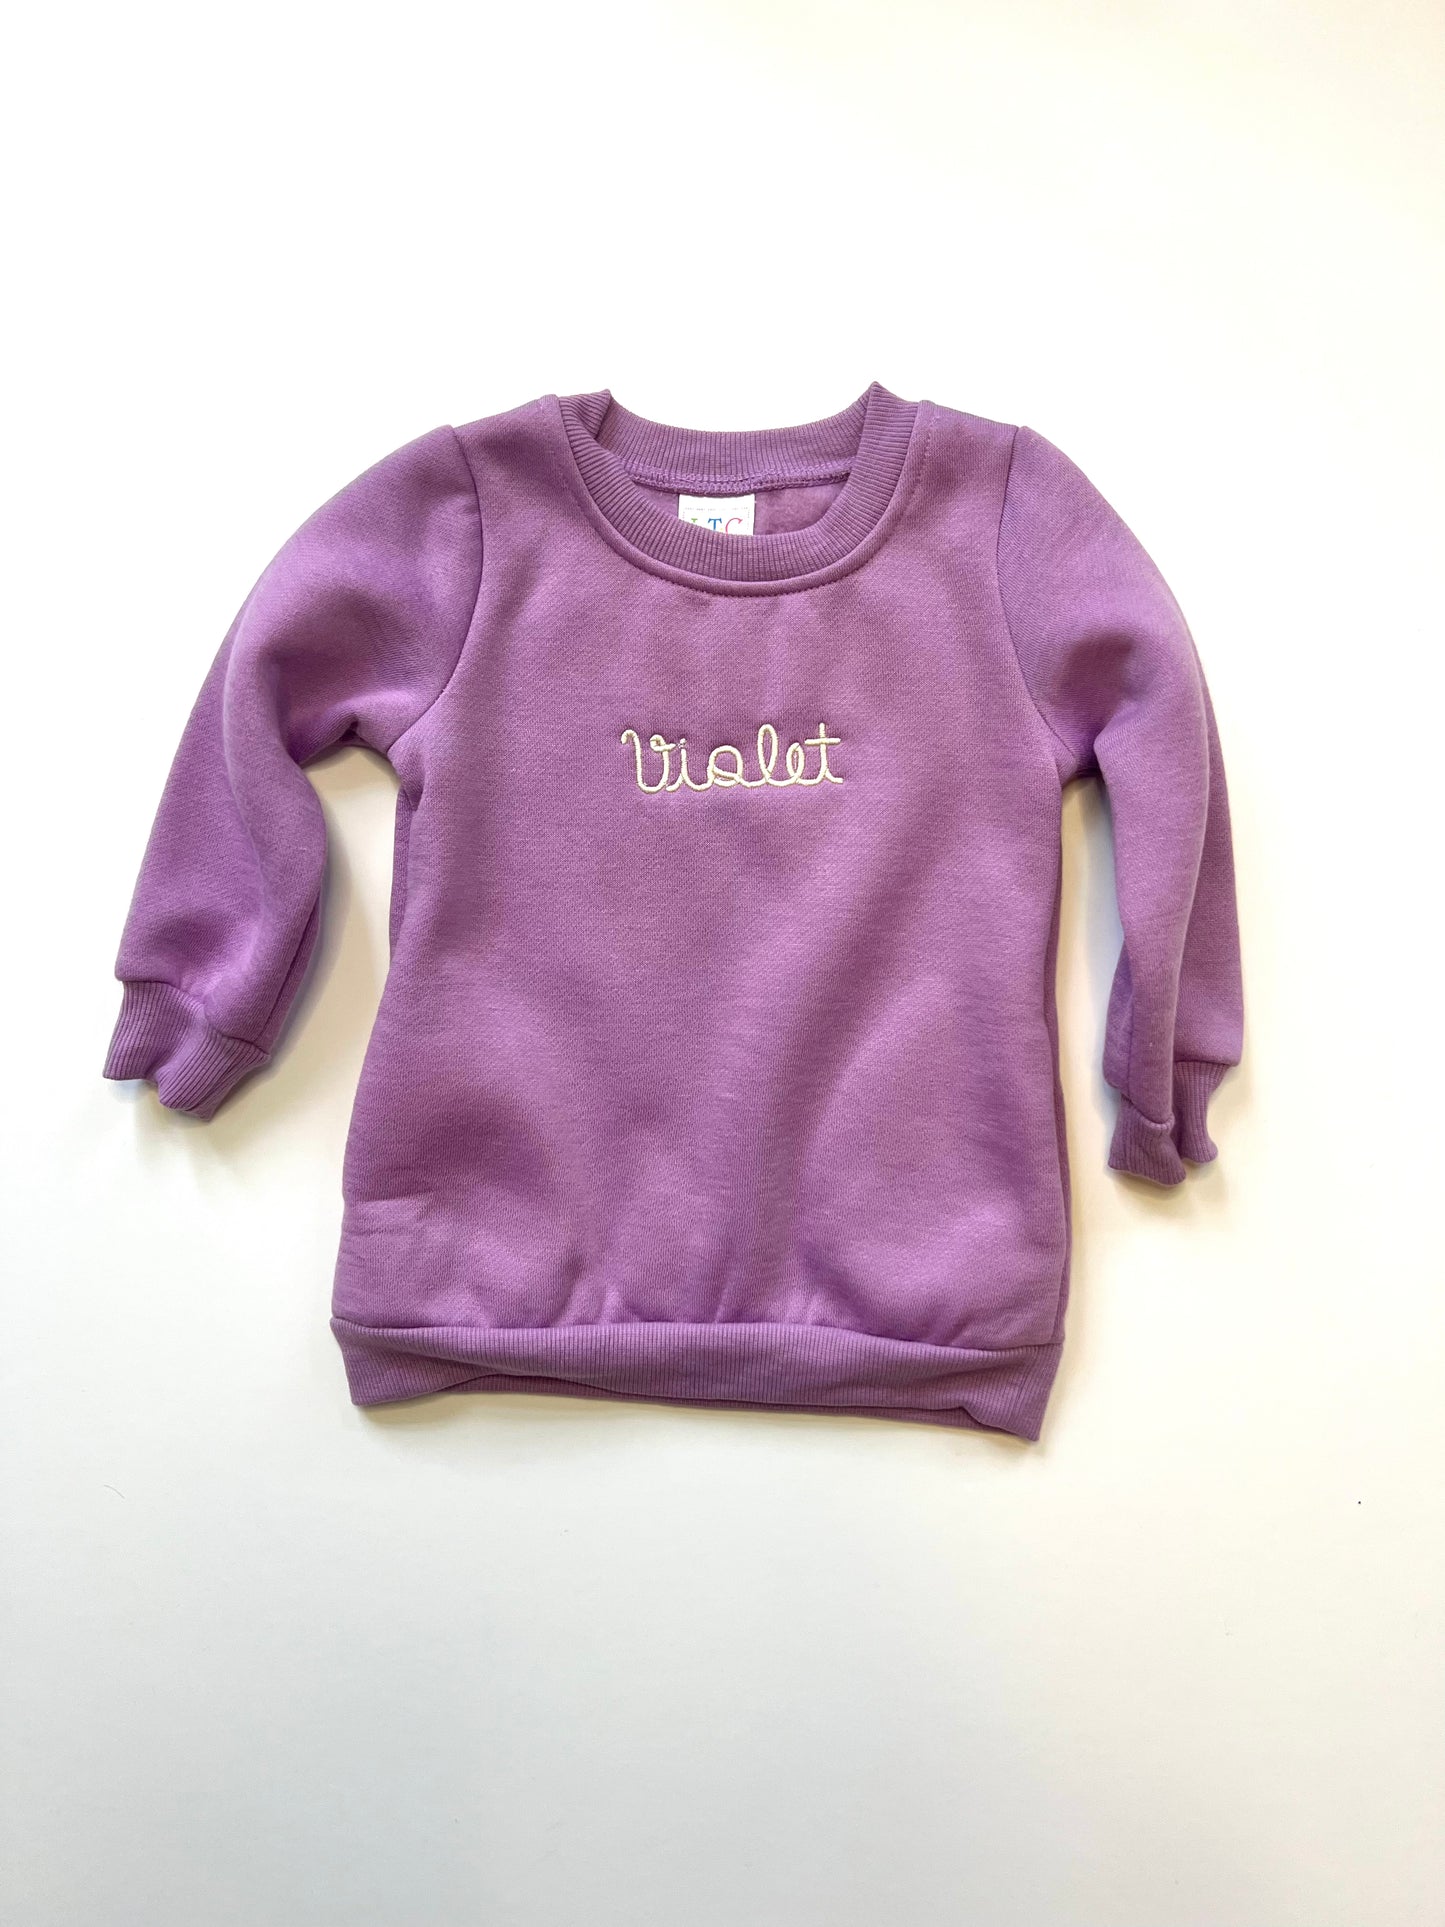 Toddler & Kids' Pink or Lavender Round Neck Sweatshirt